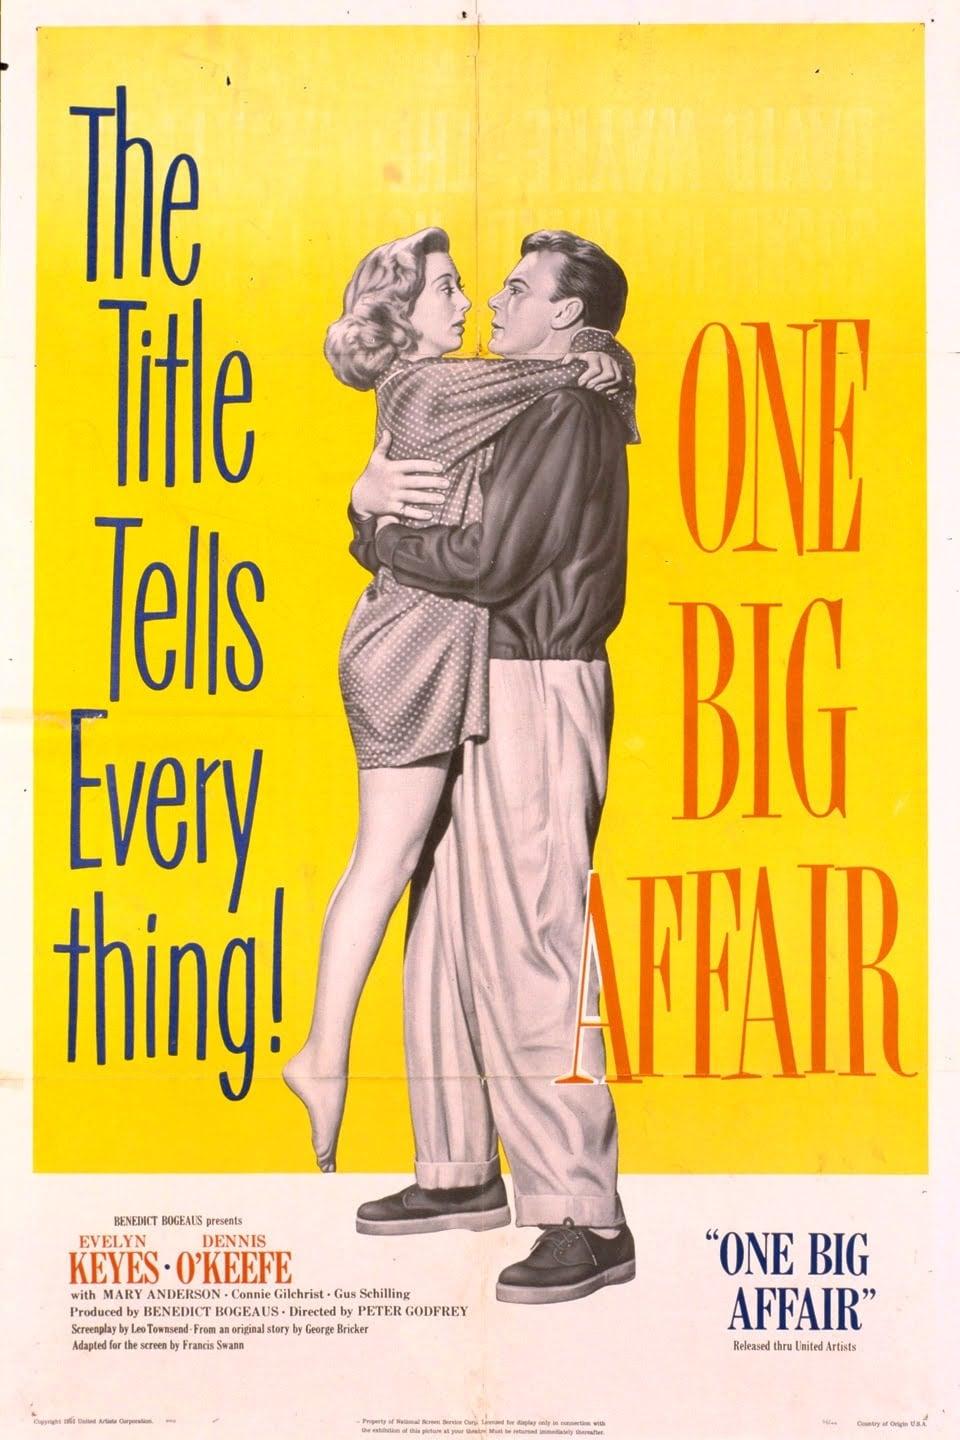 One Big Affair poster